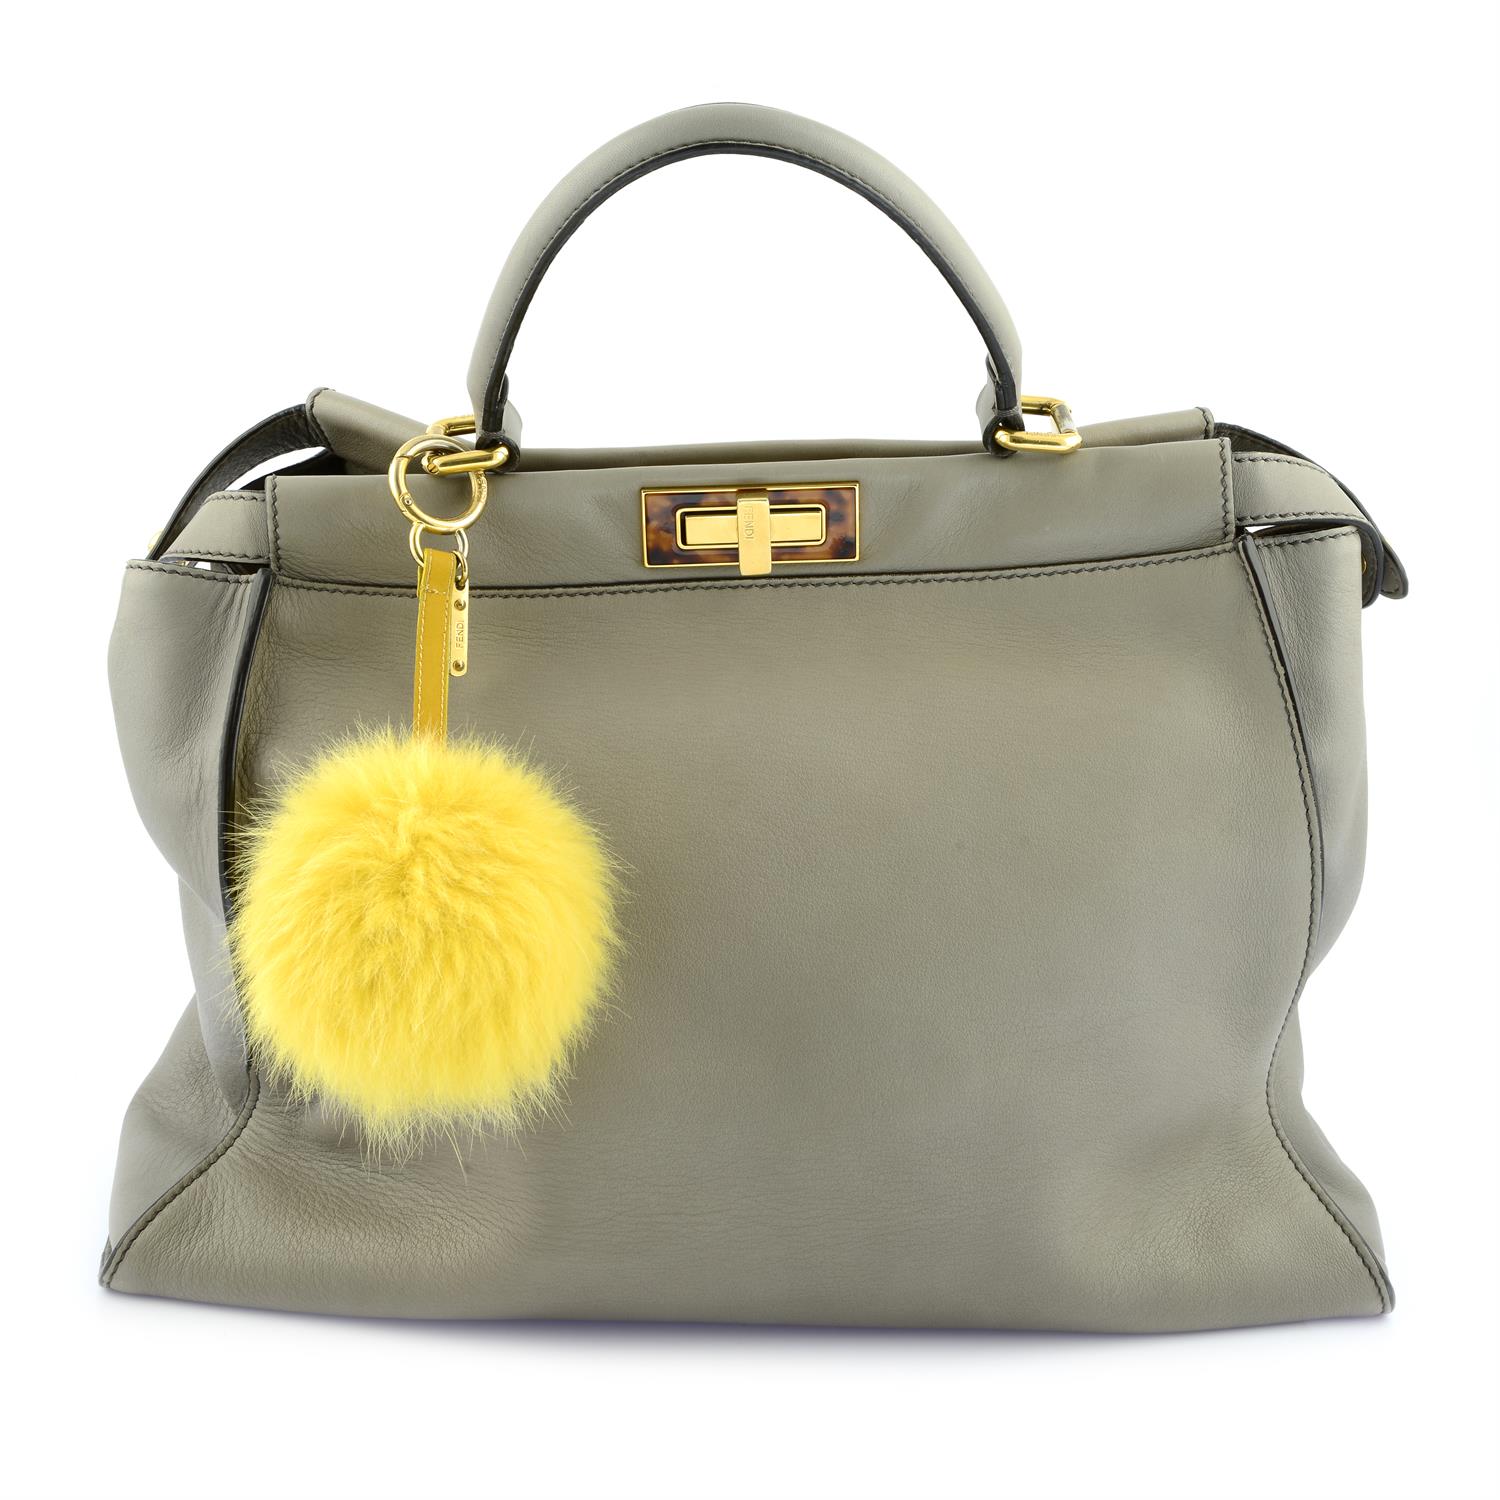 FENDI - a grey leather Peekaboo tote bag with yellow fox fur pompom.